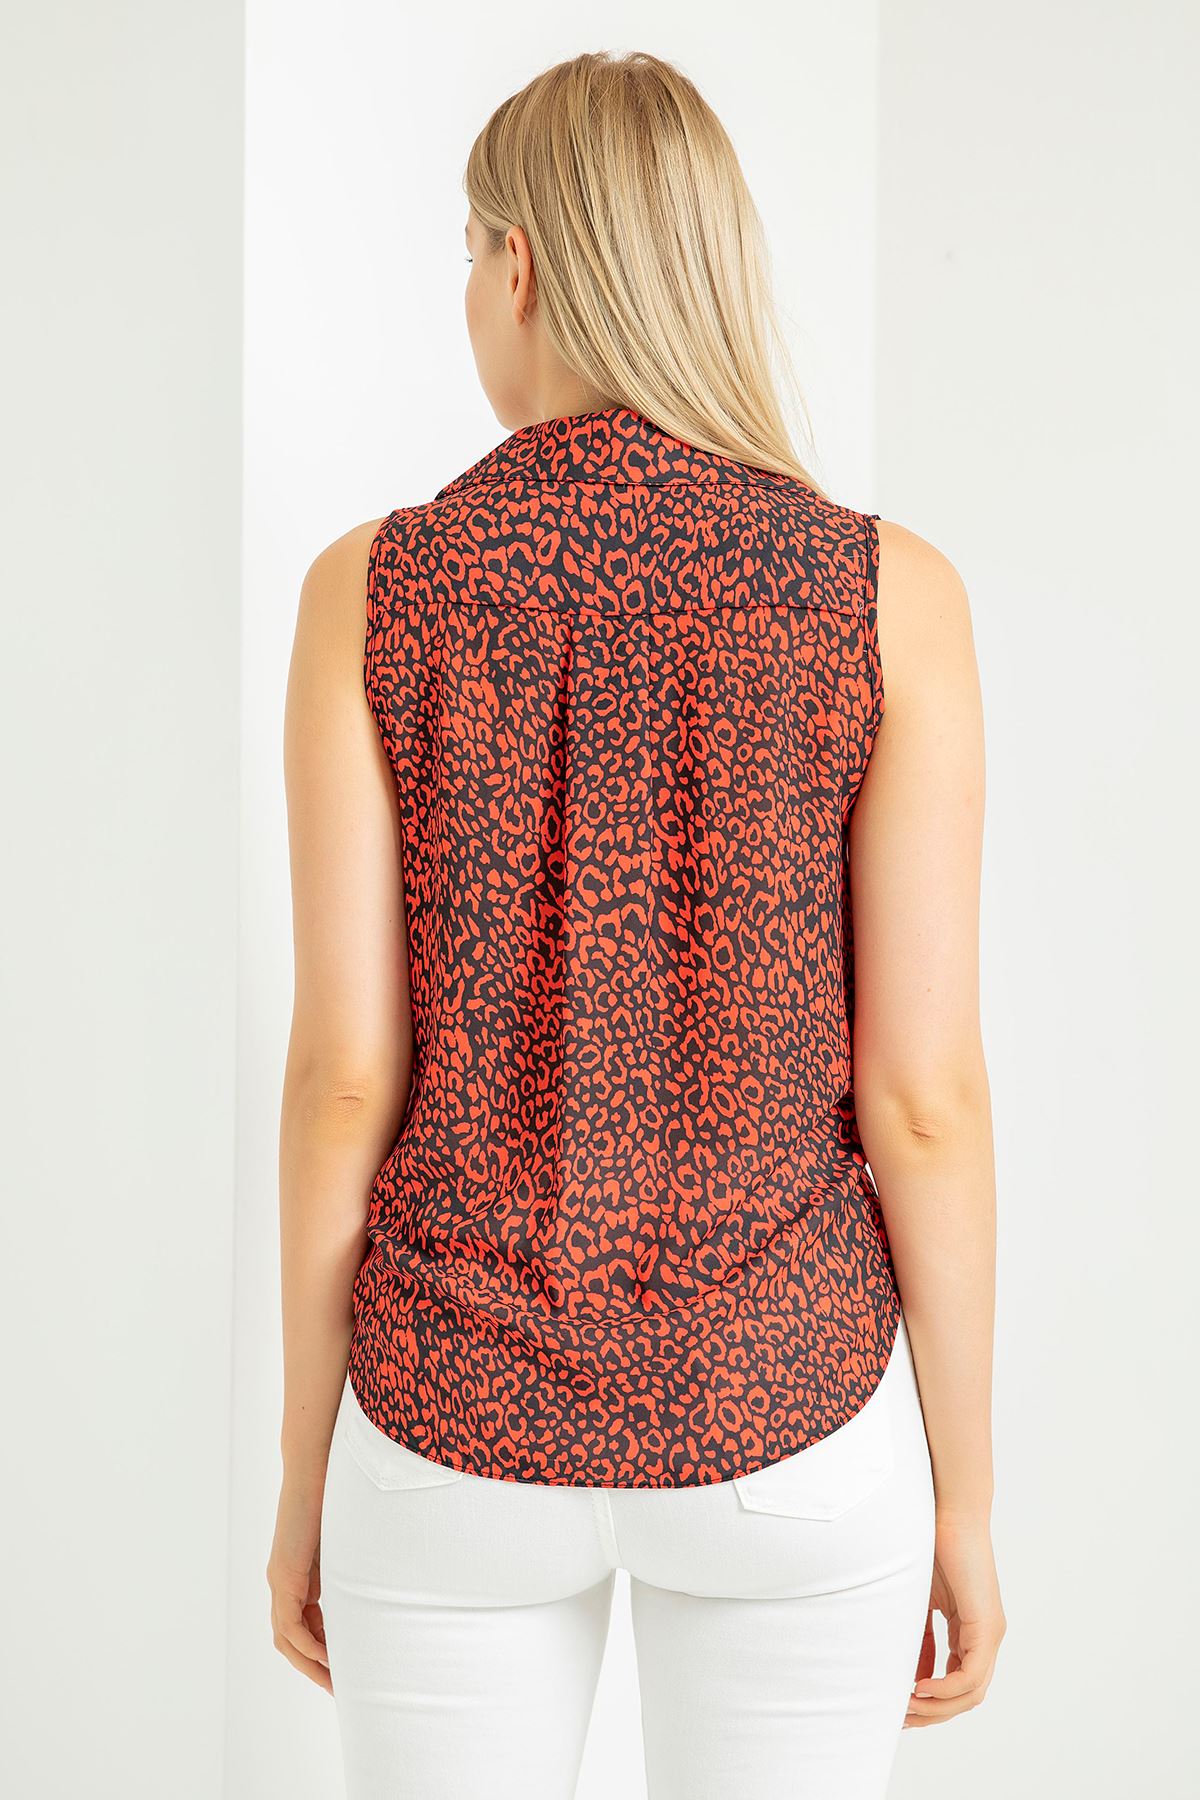 Jessica Fabric Sleeveless Shirt Collar Auger Leopard Print Blouse - Burgundy